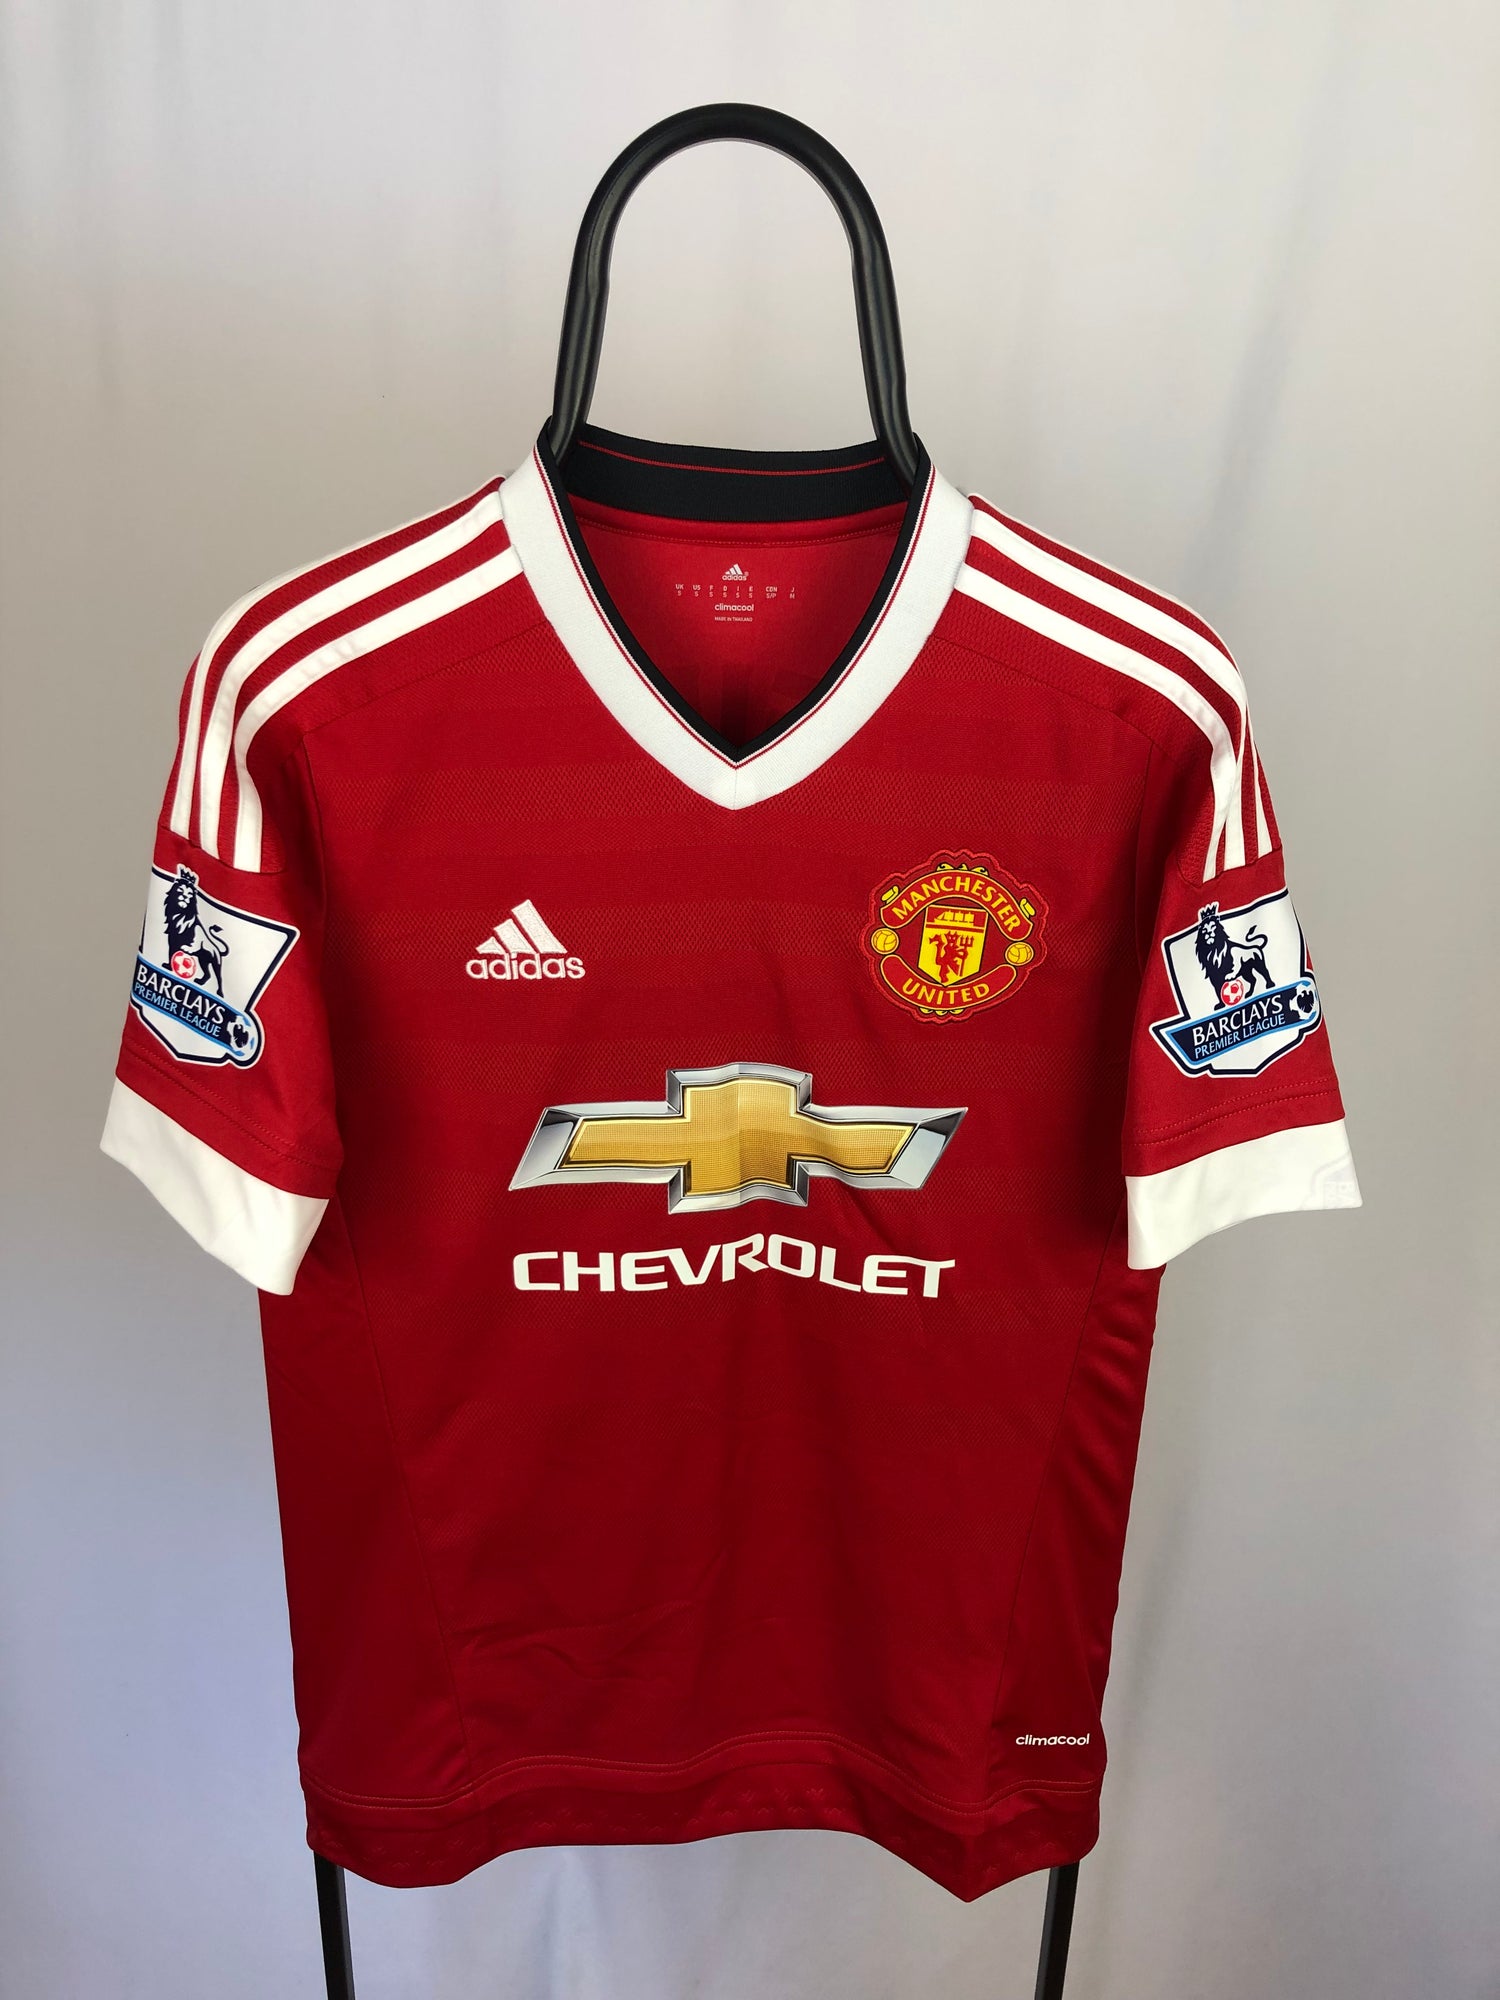 Morgan Schneiderlin Manchester United 15/16 home shirt - S